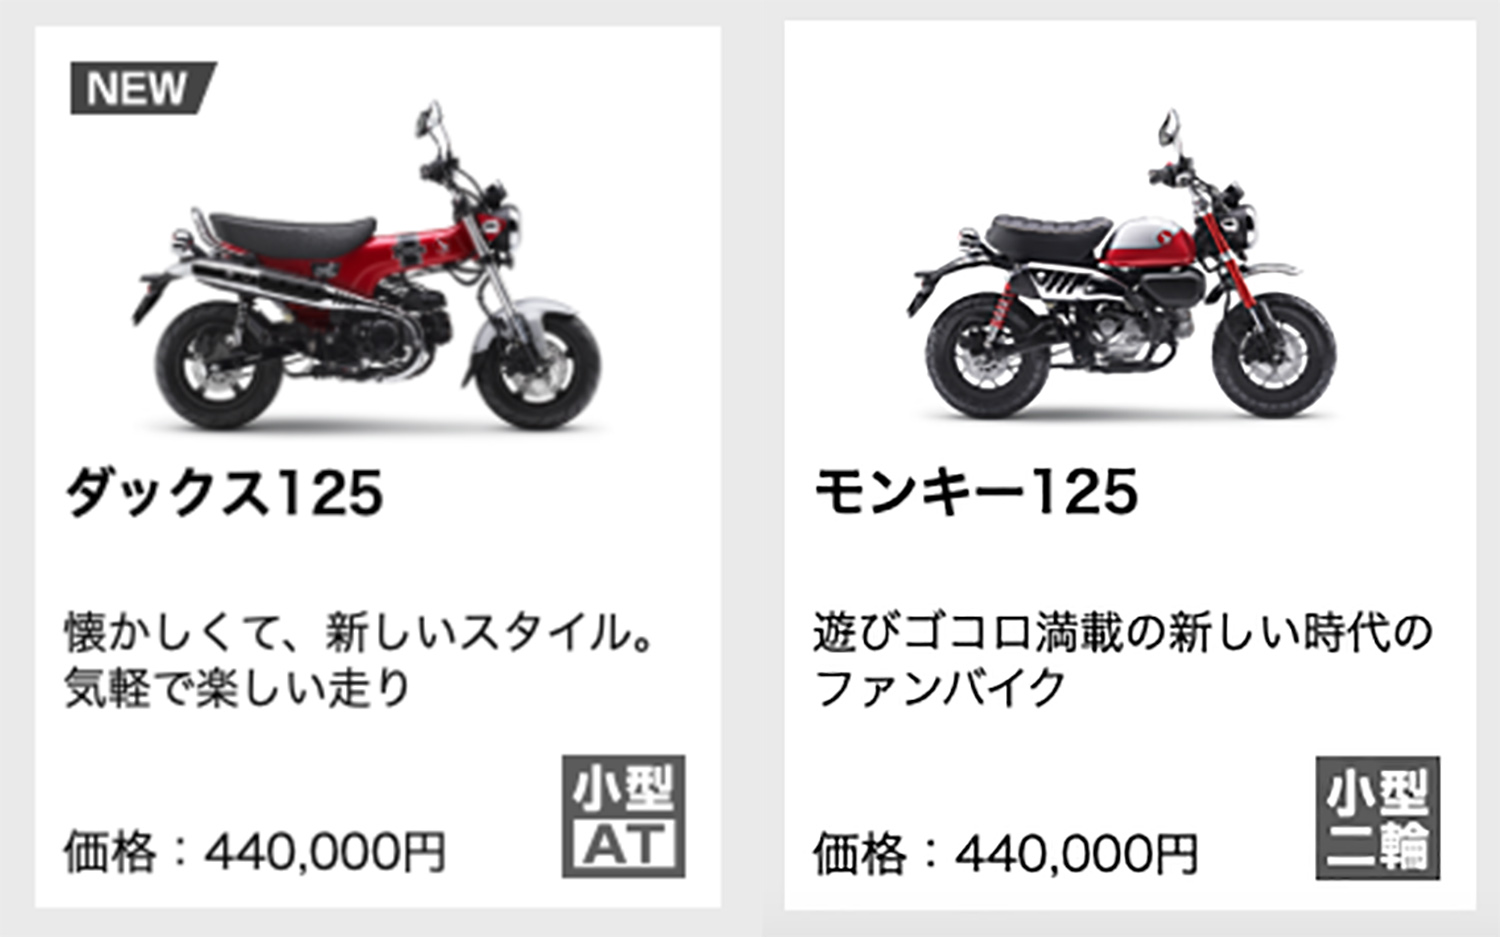 DAX 125在日本售價與MONKEY 125同樣為44萬日幣，約台幣10.3萬元